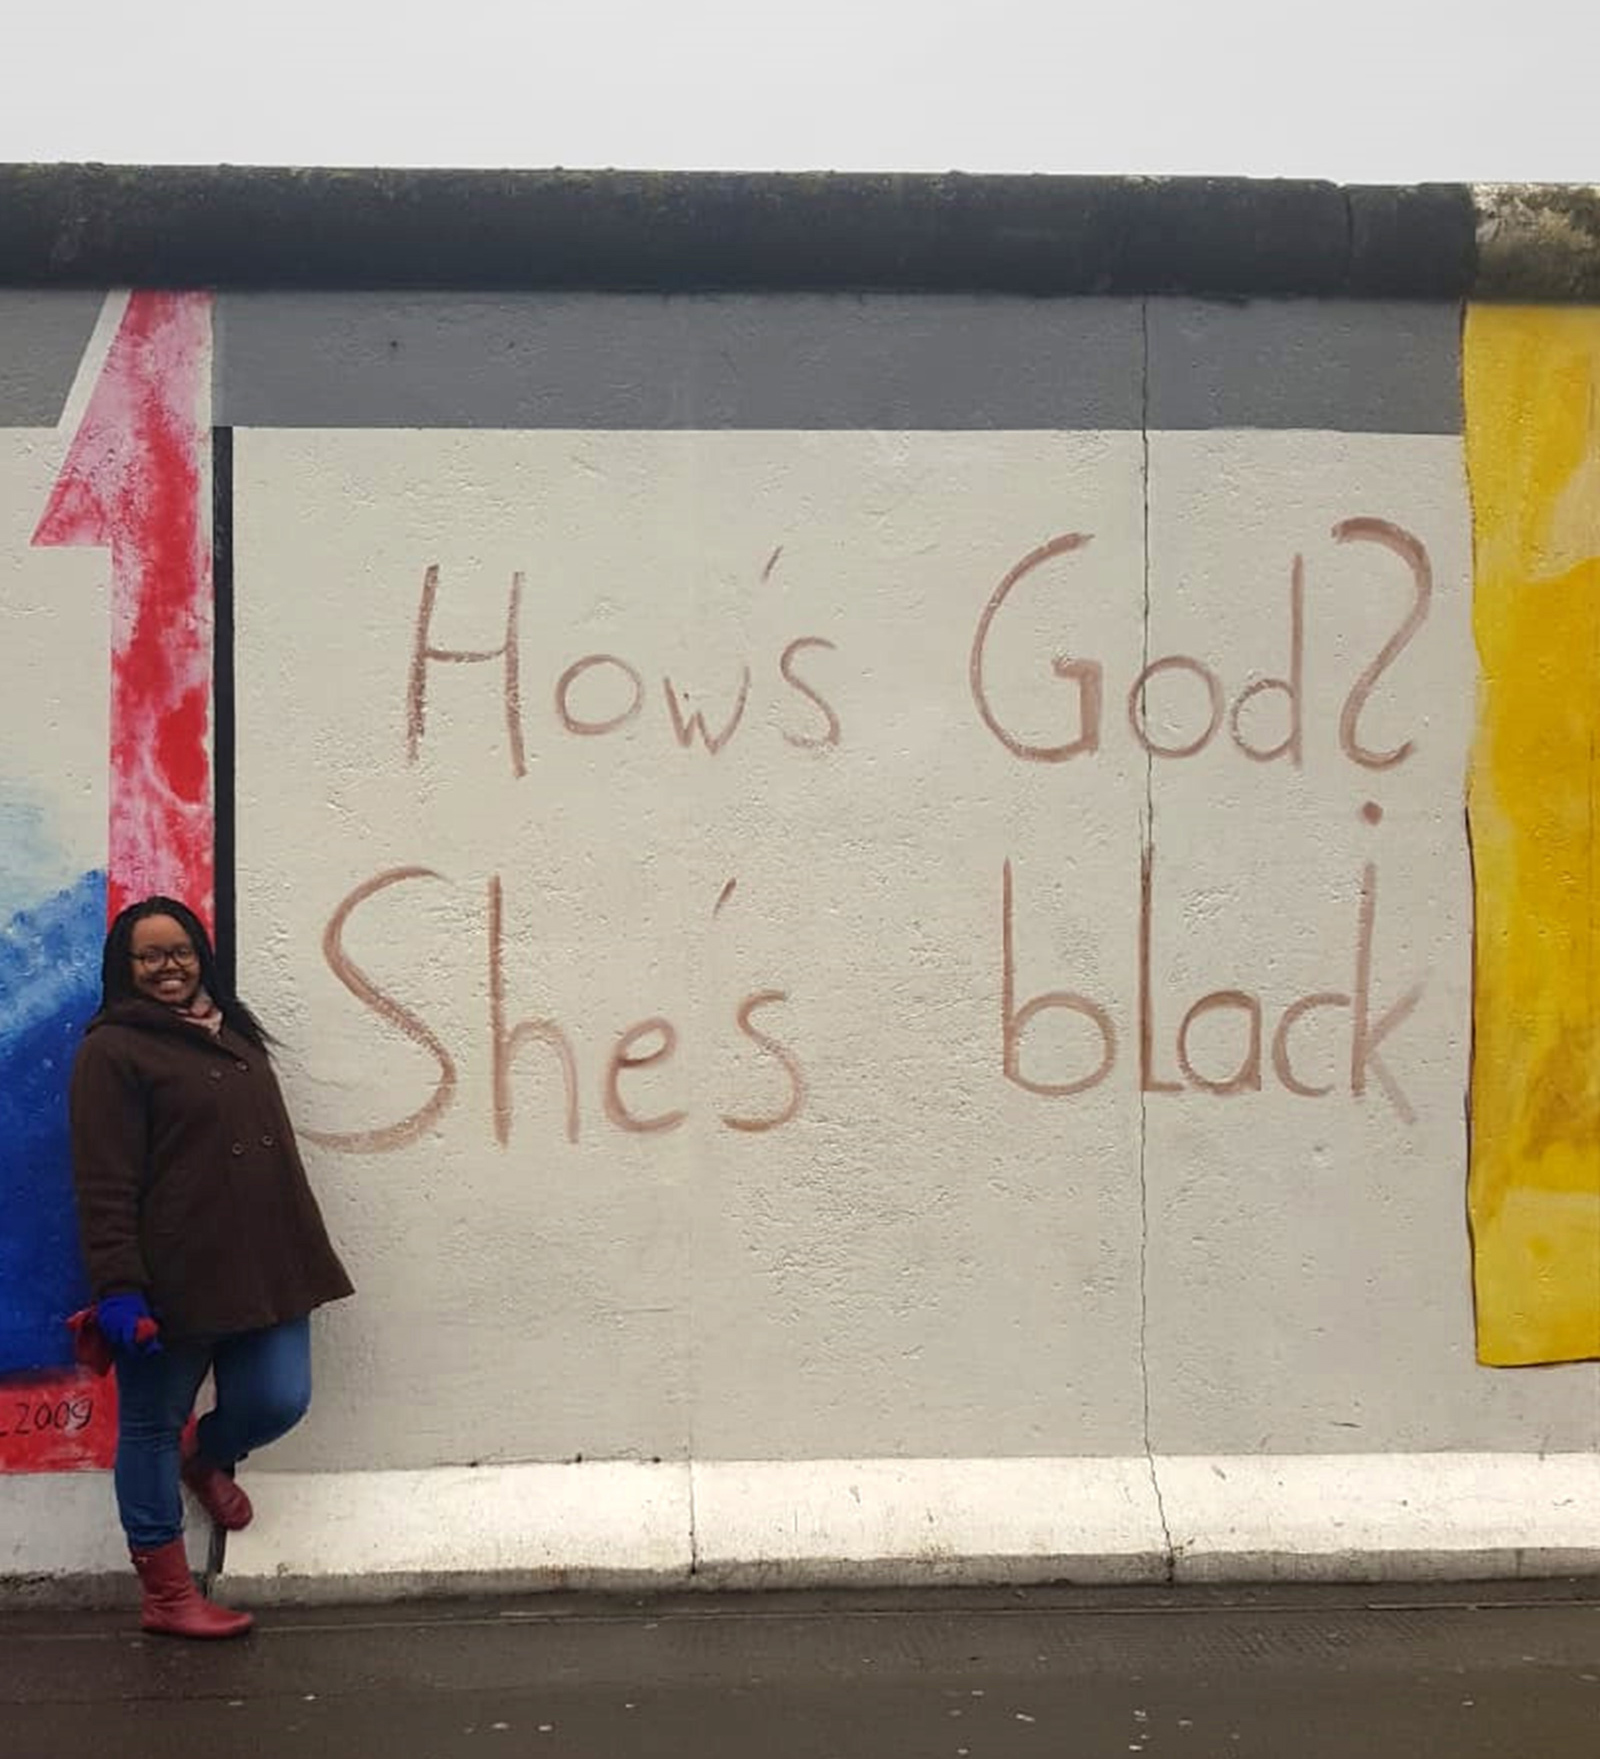 God? - she's black